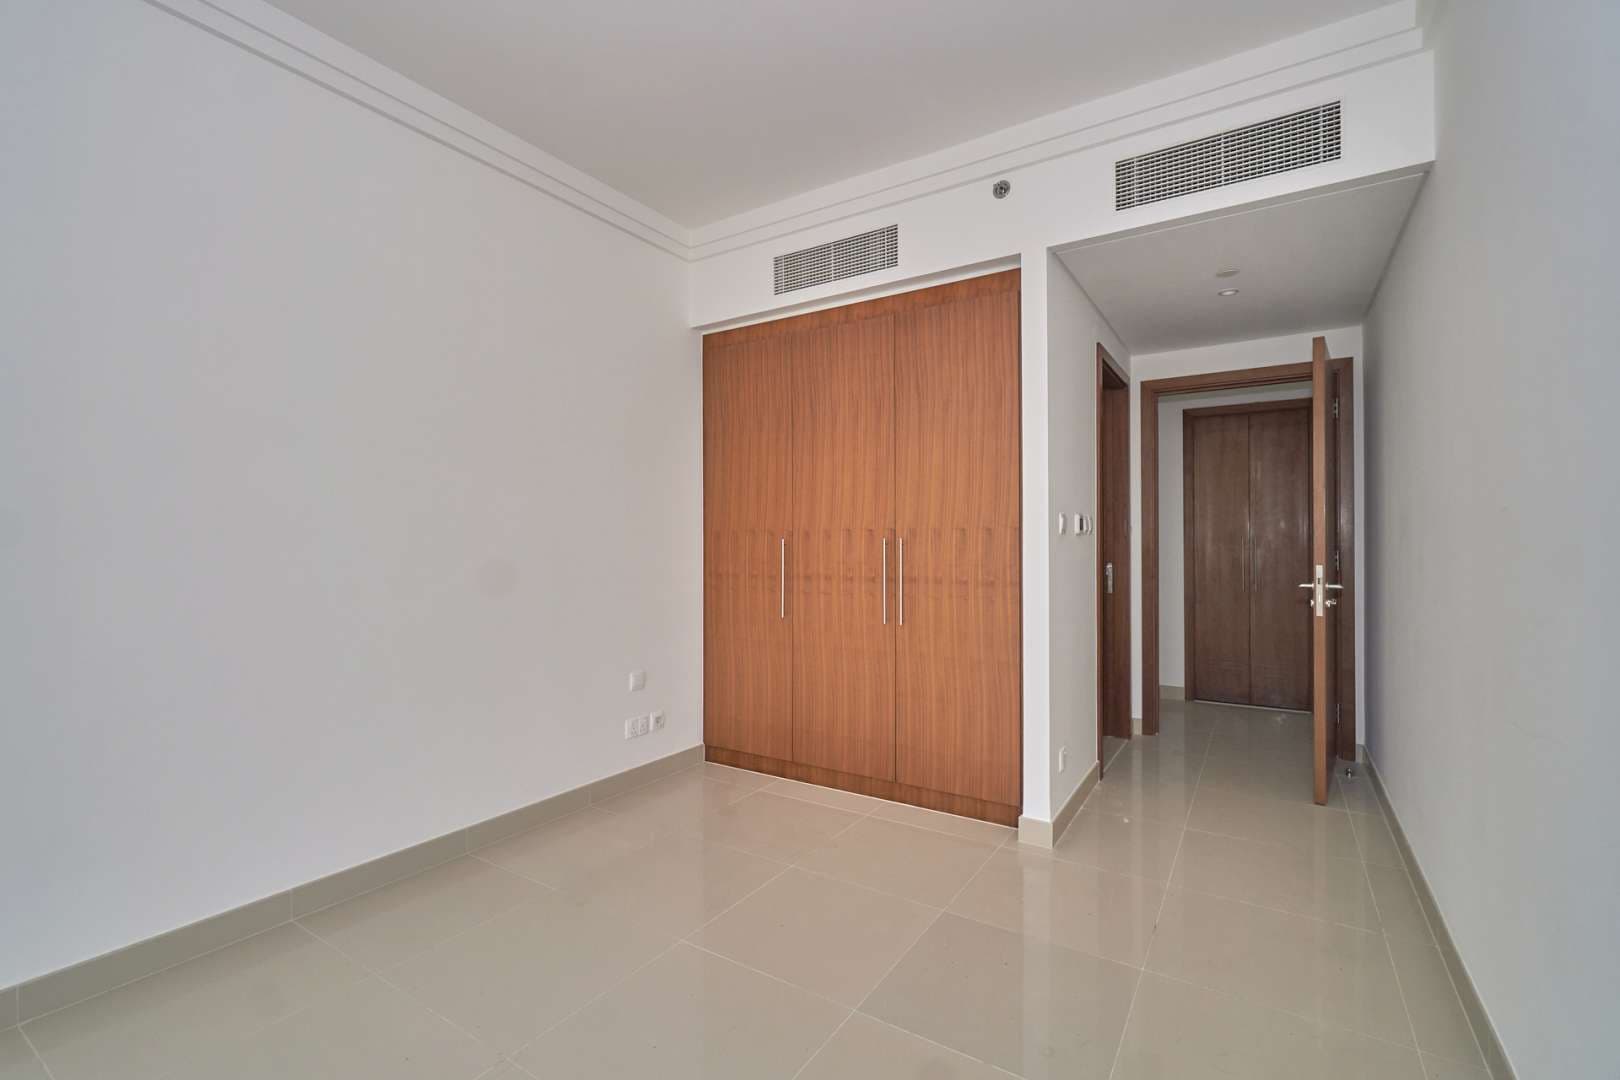 1 Bedroom Apartment For Sale Boulevard Point Lp08219 88656eee8bfba80.jpg